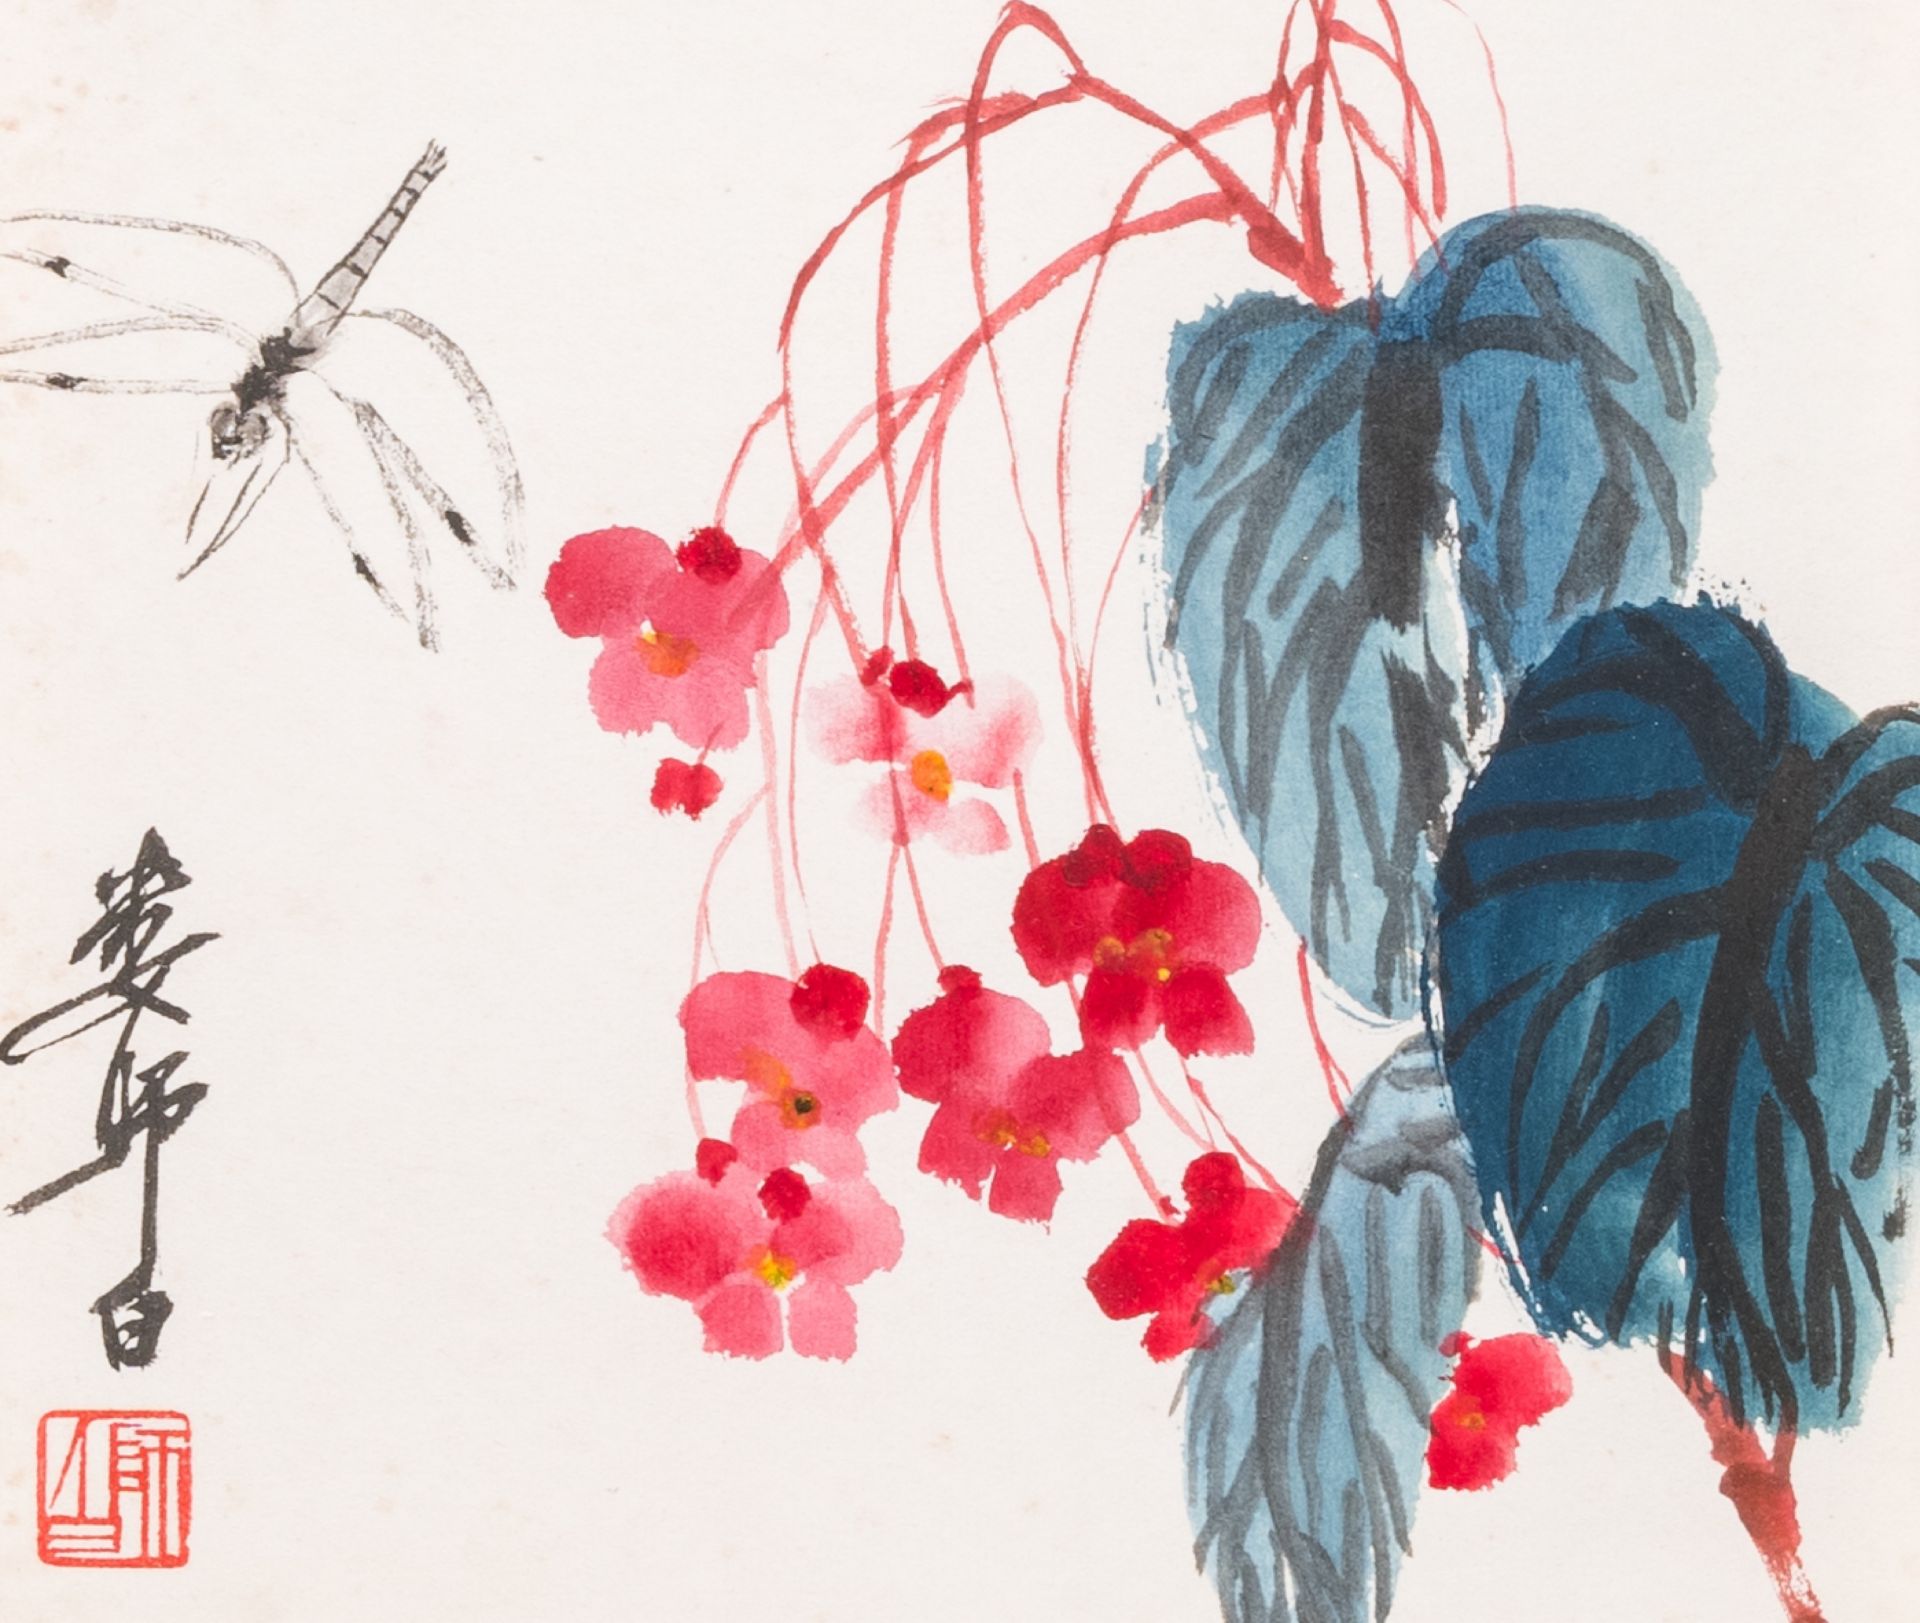 Lou Shibai å©å¸«ç™½ (1918-2010): 'Dragonfly and flowers' and Qi Gong å•ŸåŠŸ (1912-2005): 'Calligrap - Image 3 of 10